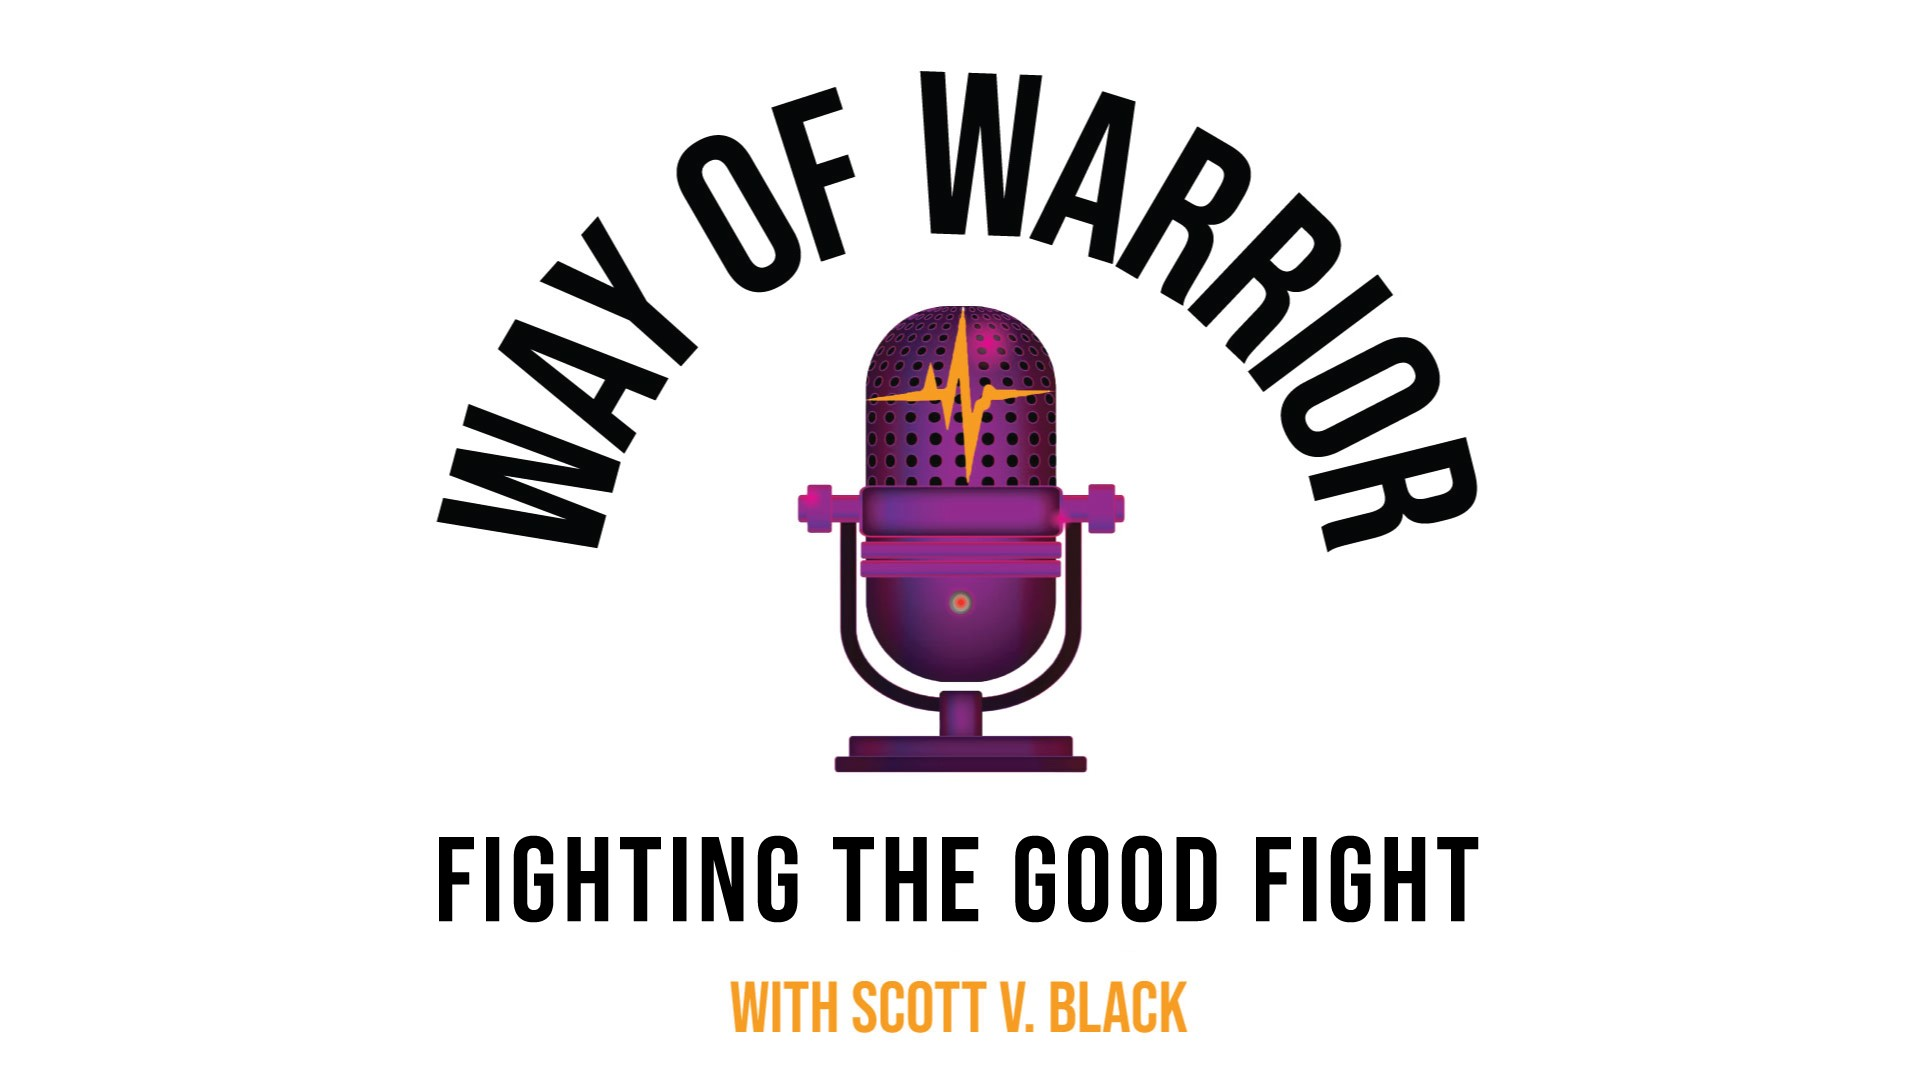 Way of Warrior with Scott V. Black